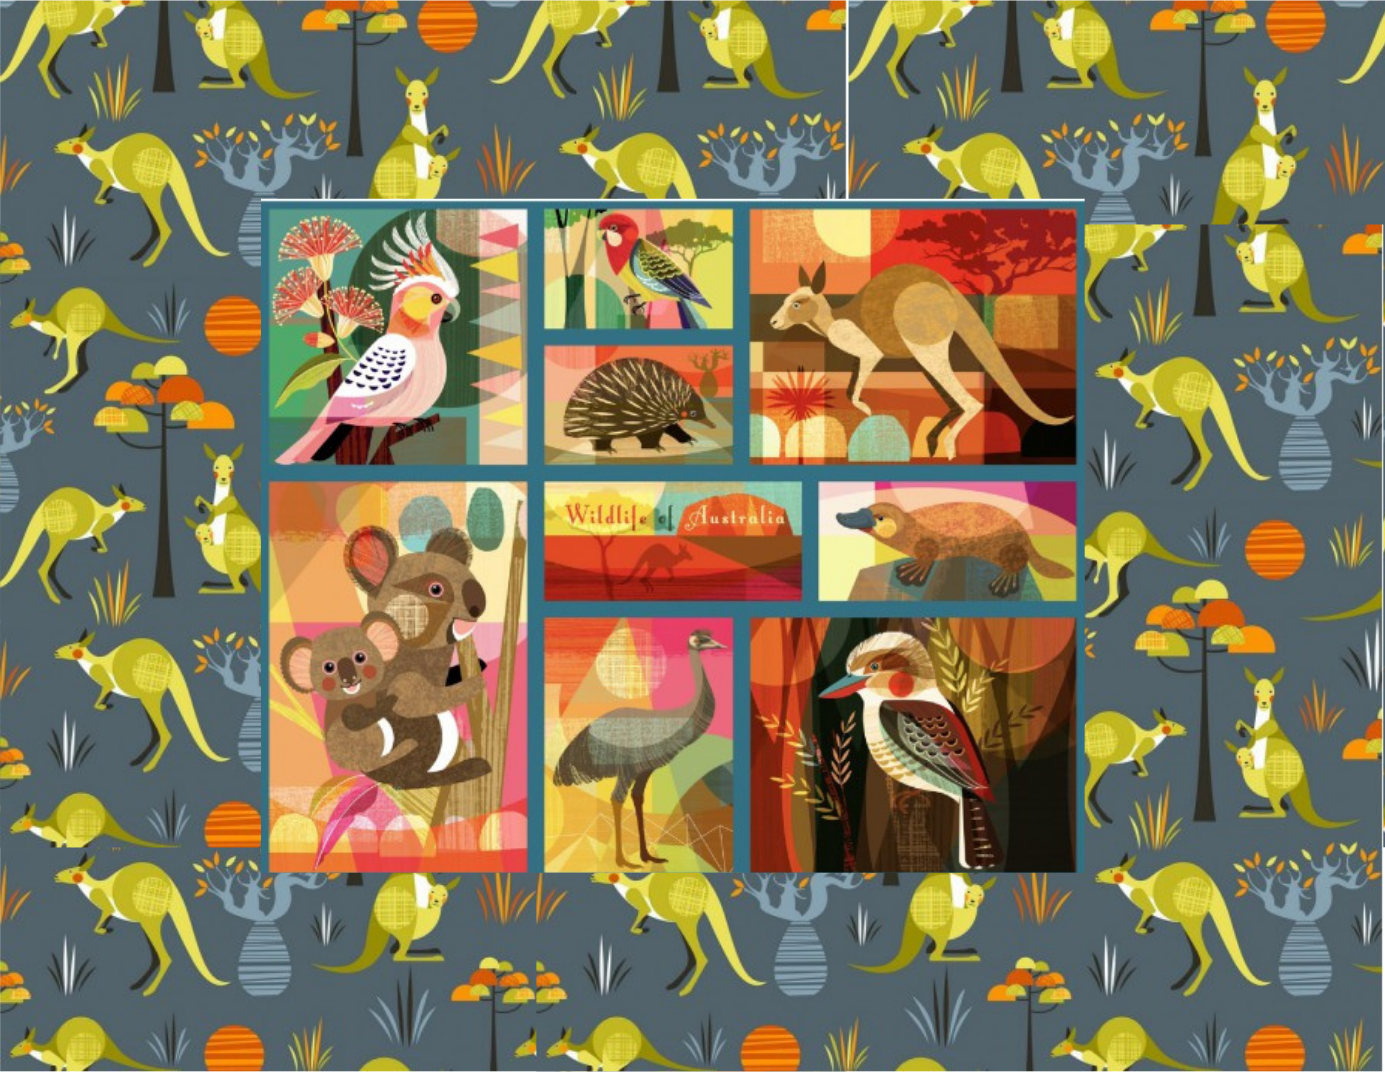 Wildlife of Australia Panel by Ellen Giggenbach